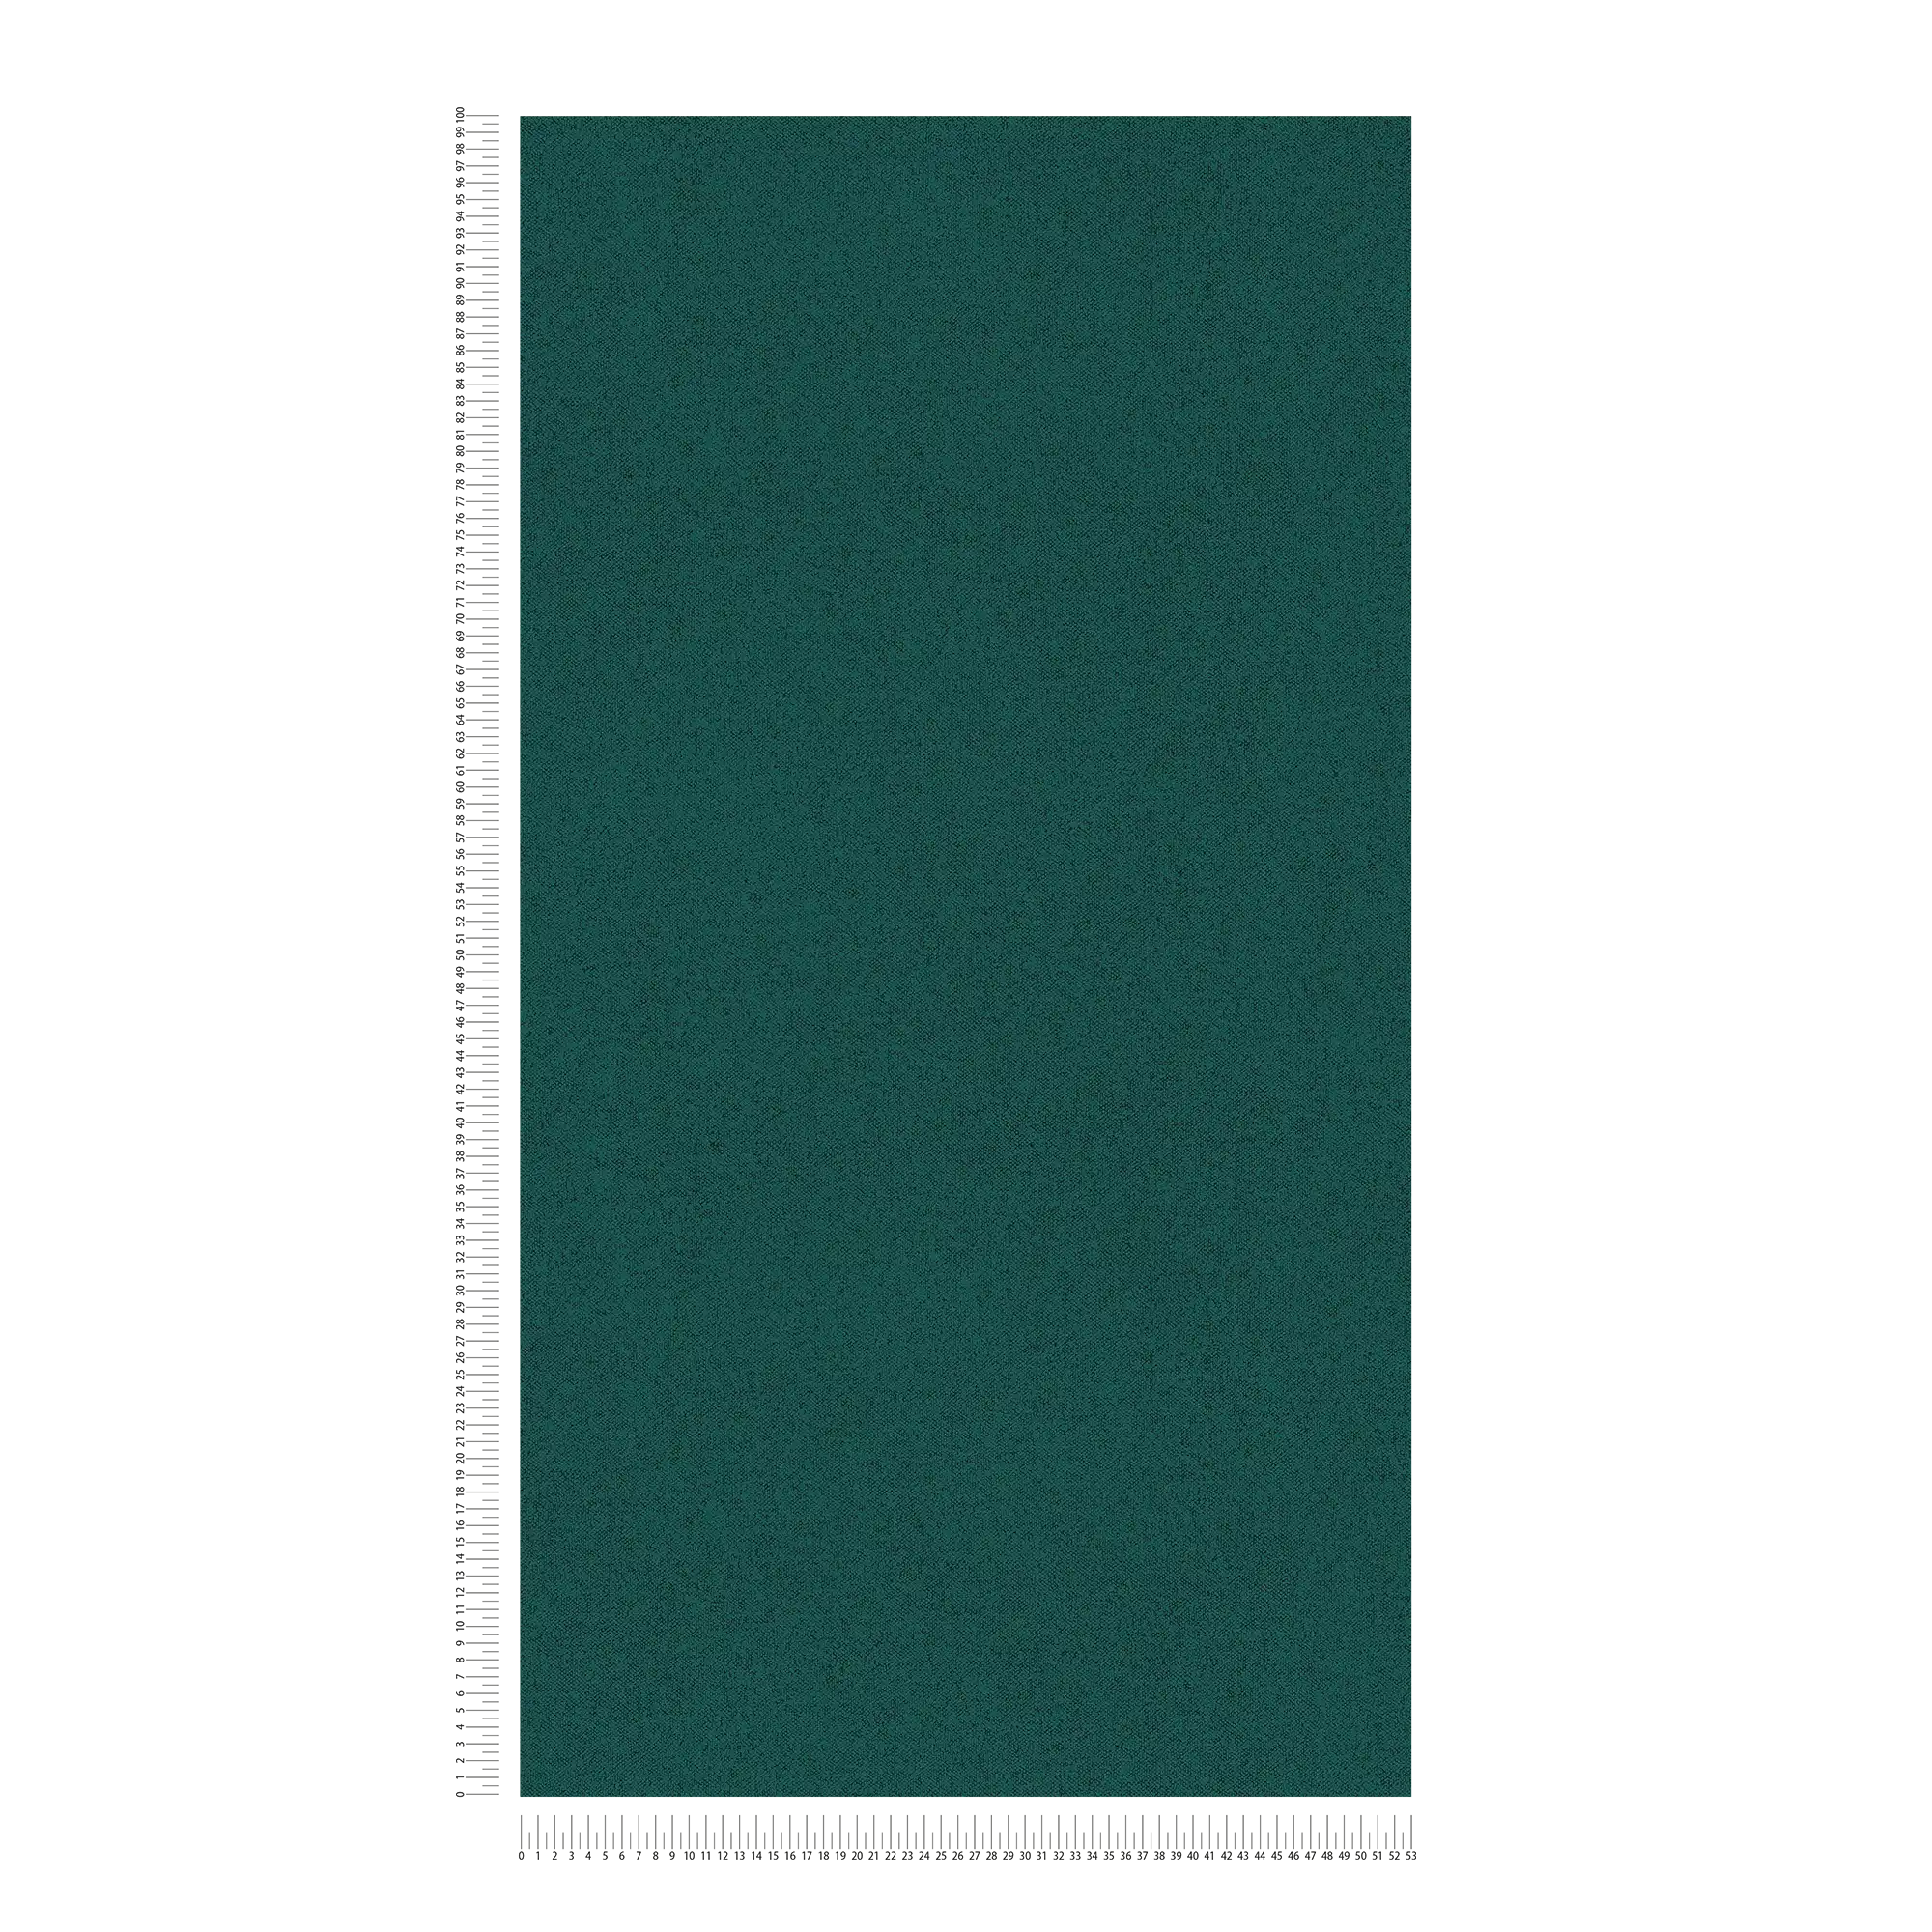             Carta da parati a tinta unita con effetto lino - verde
        